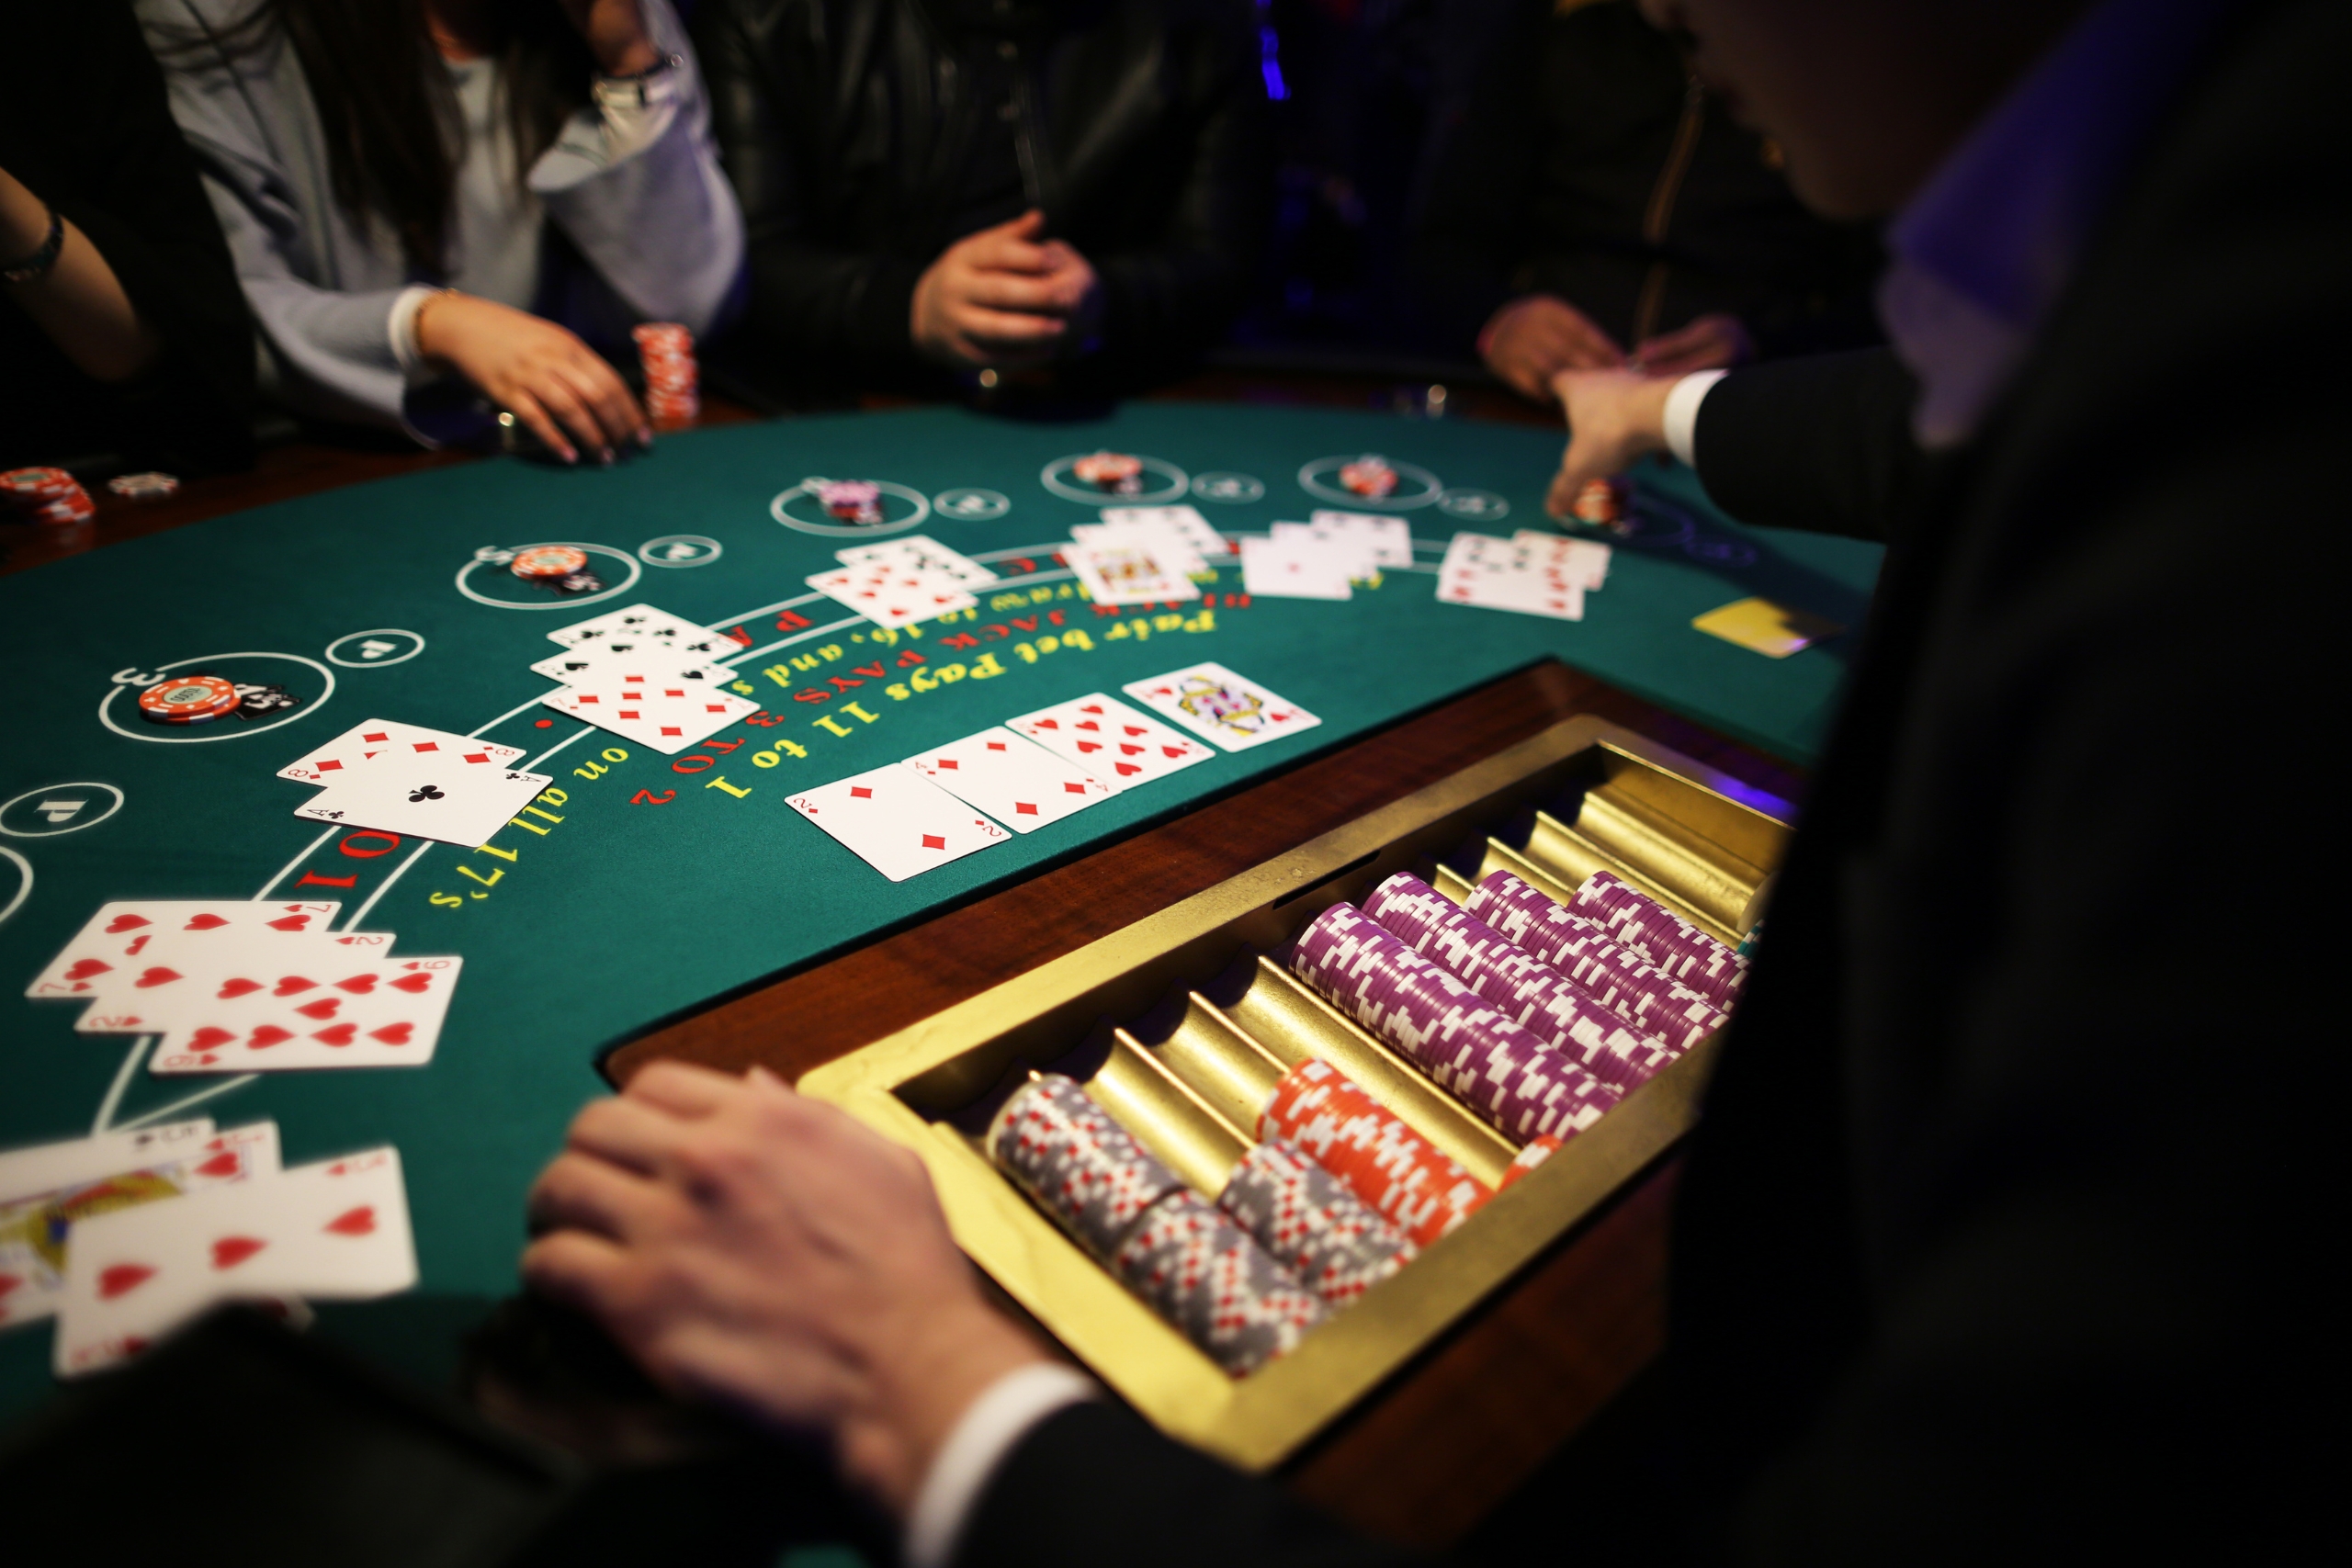 The Casino table for bakara